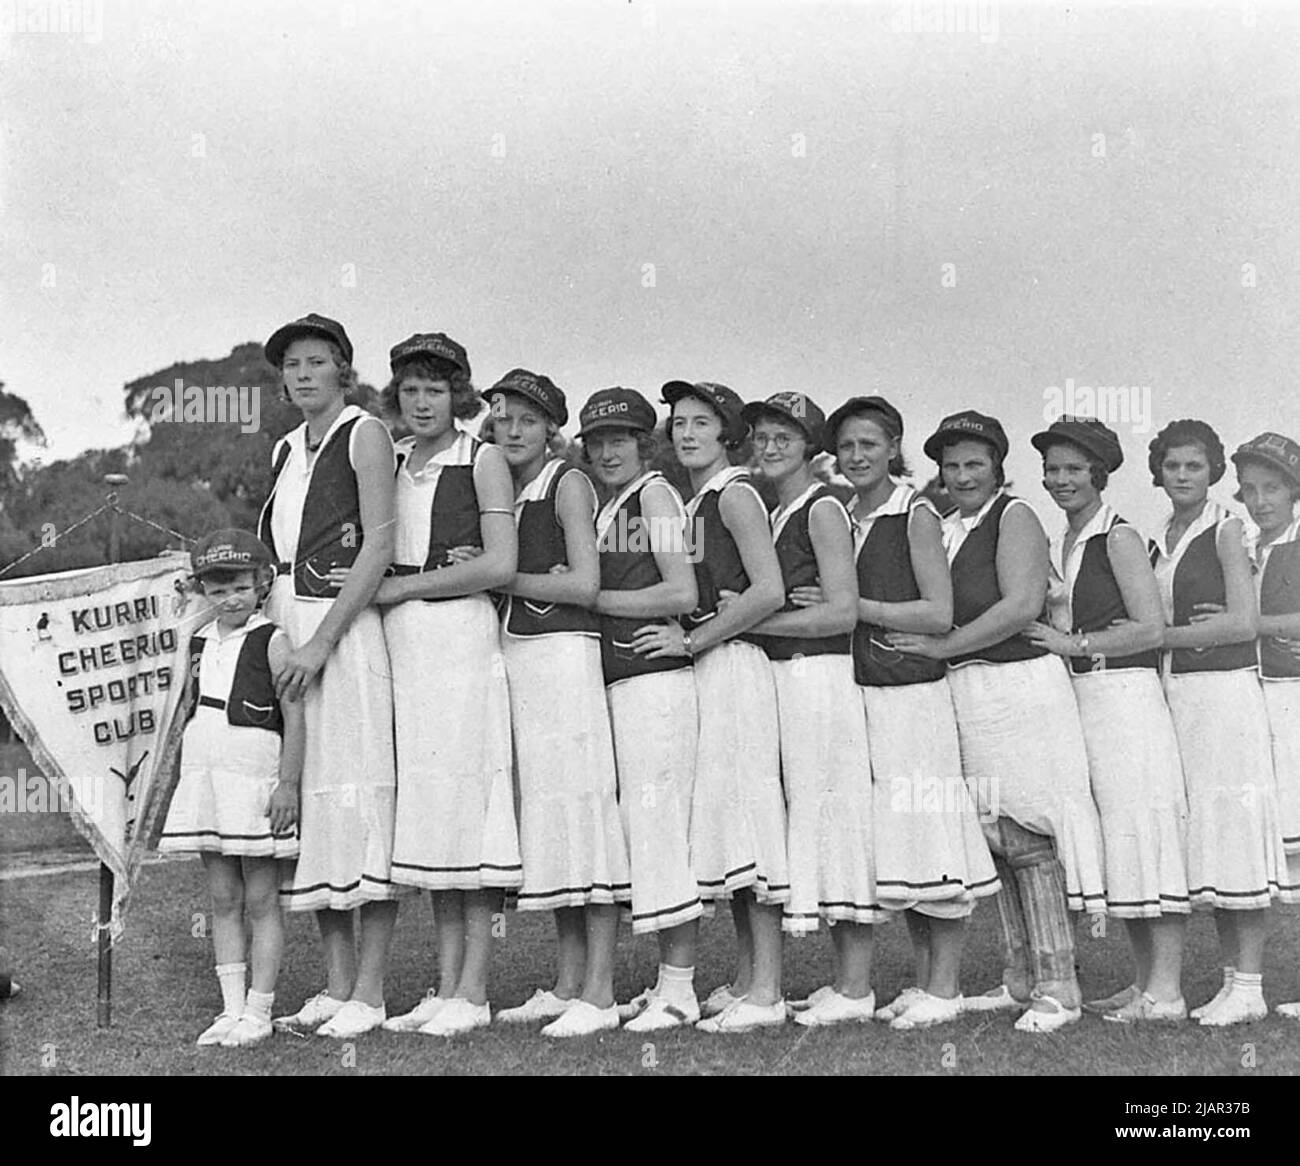 Members of the Kurri Kurri Cheerio Sports Club team ca. 1934 Stock Photo